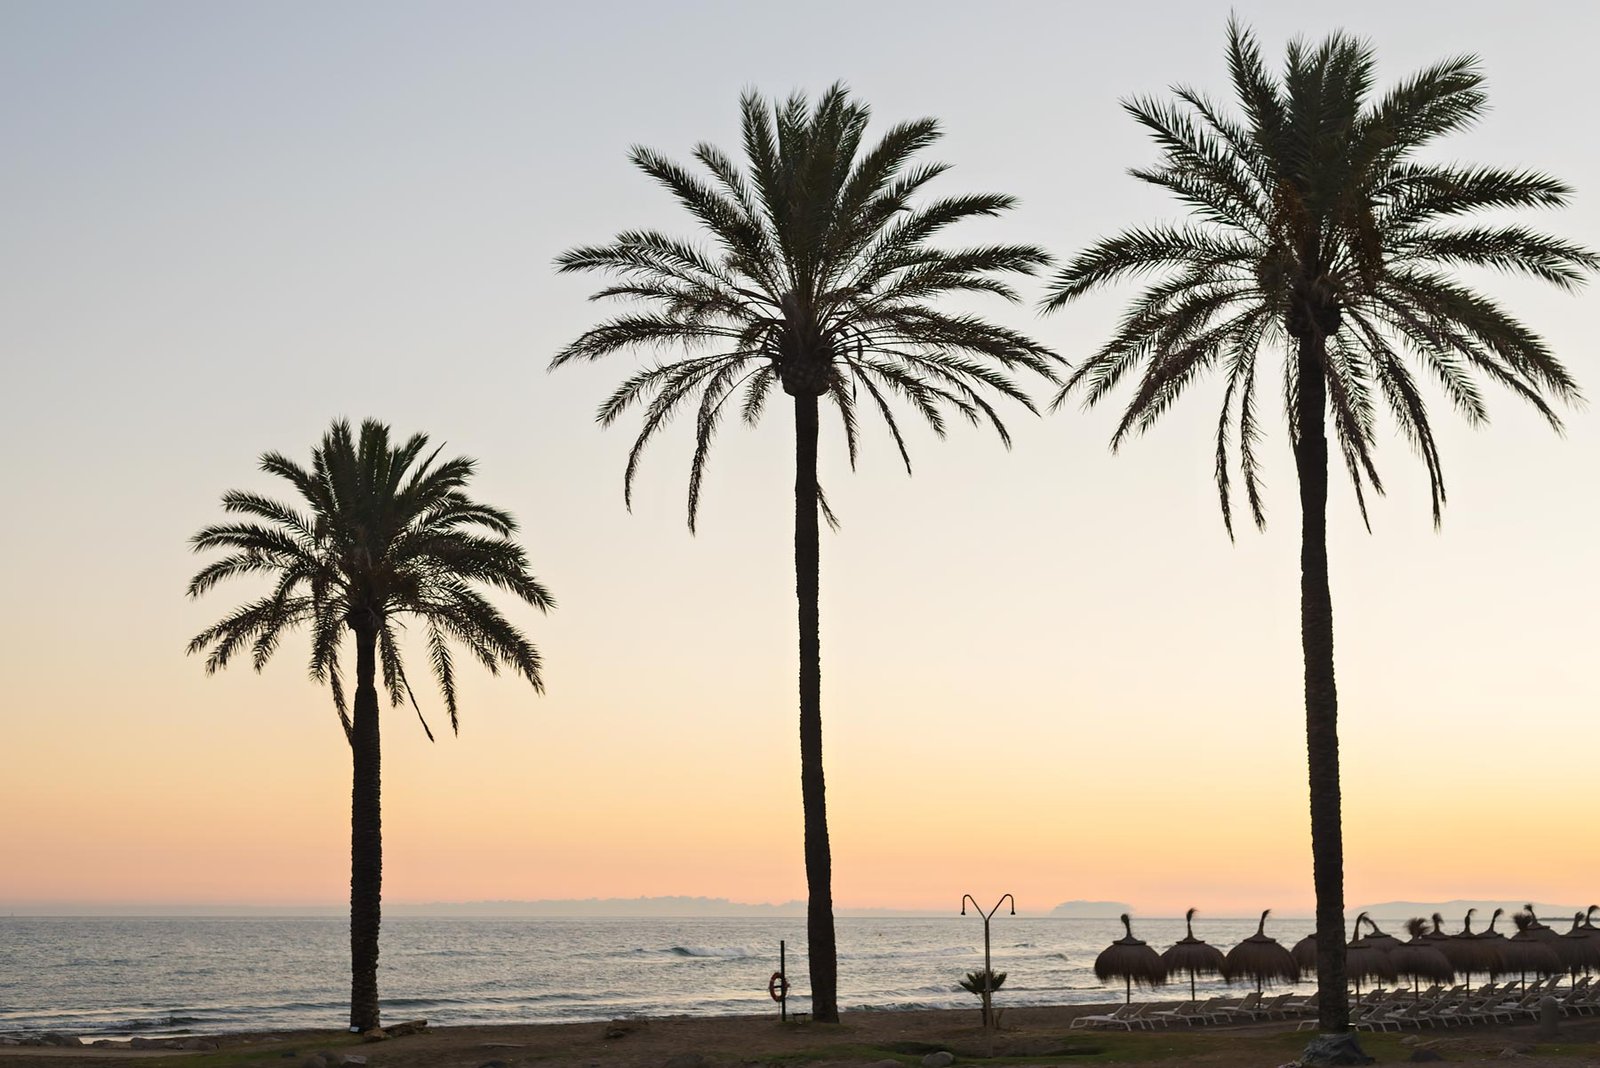 Puente Romano Beach Resort in Marbella, Spain. A Luxury 5 Star Foodie Destination.